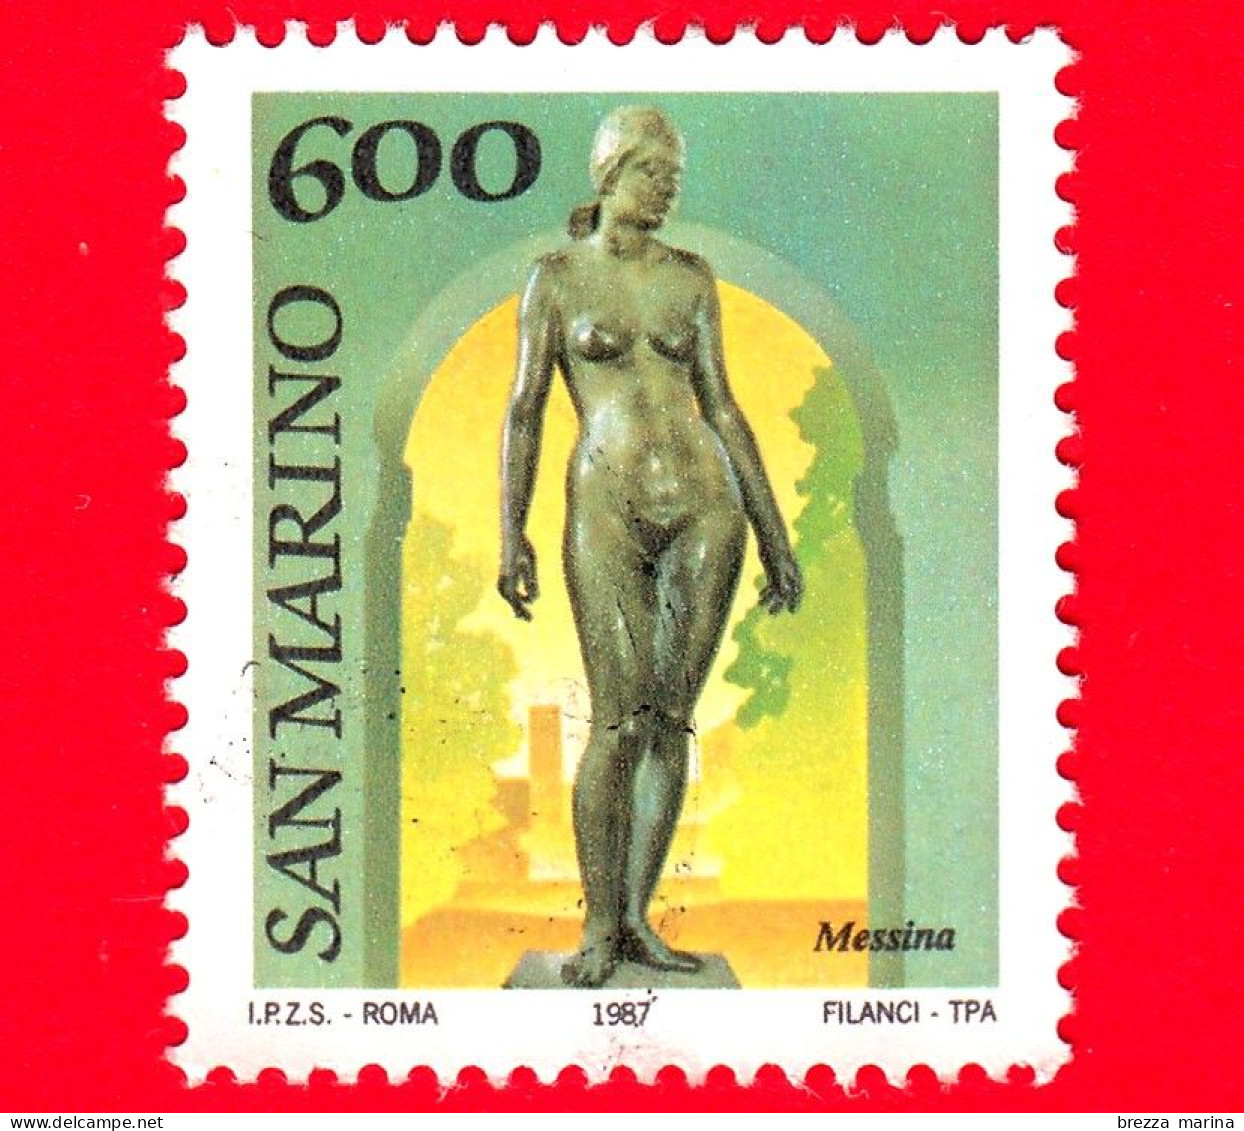 SAN MARINO - Usato - 1987 - Museo All'aperto - Scultura Di Messina - Nudo - 600 - Usados